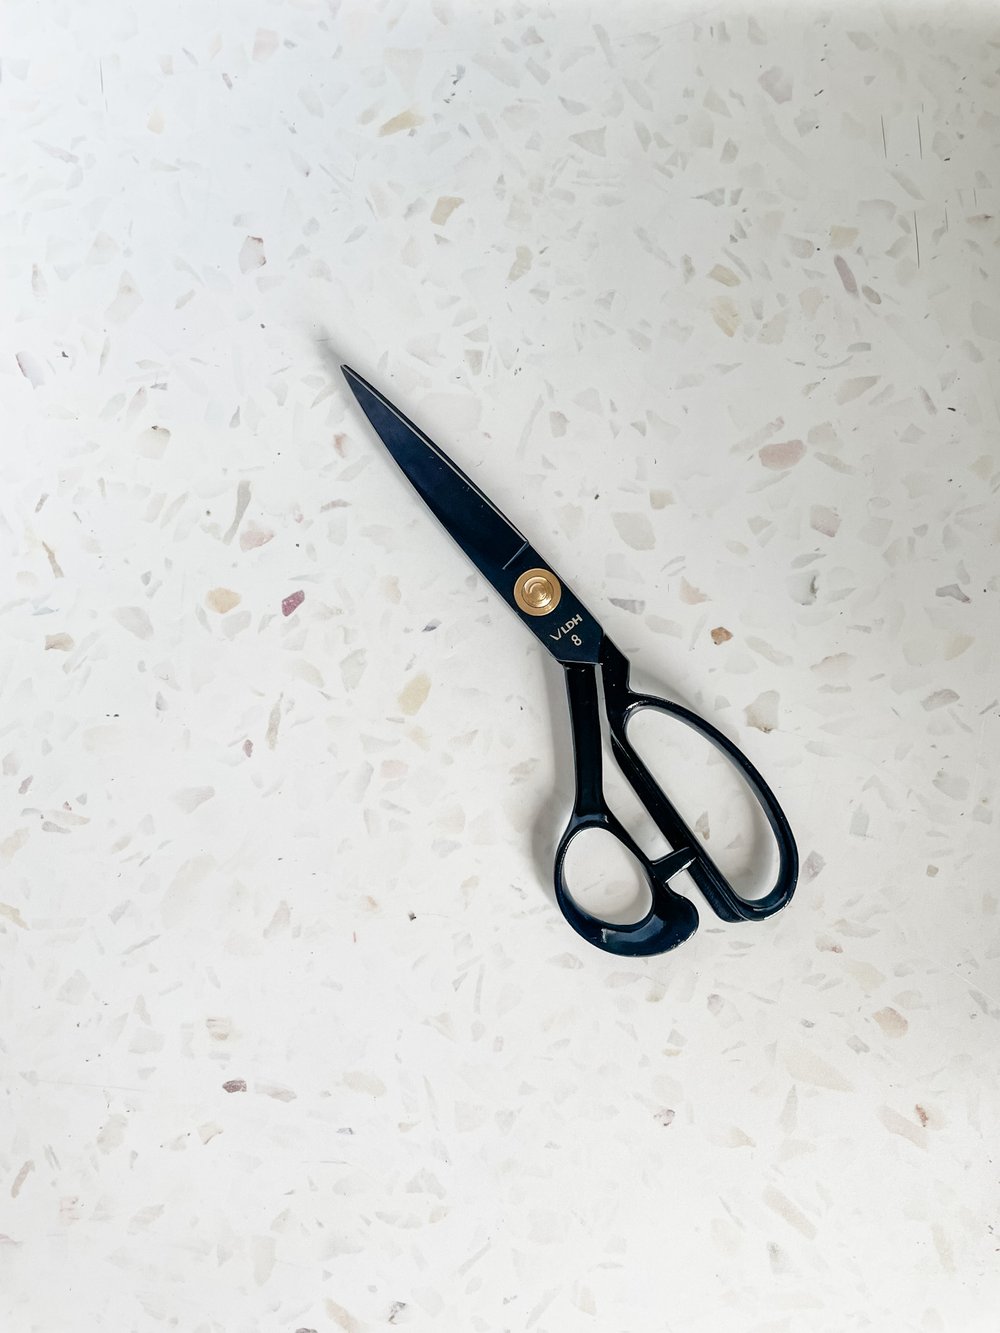 LDH 9 Fabric Shears, Midnight Edition – Scissors Up